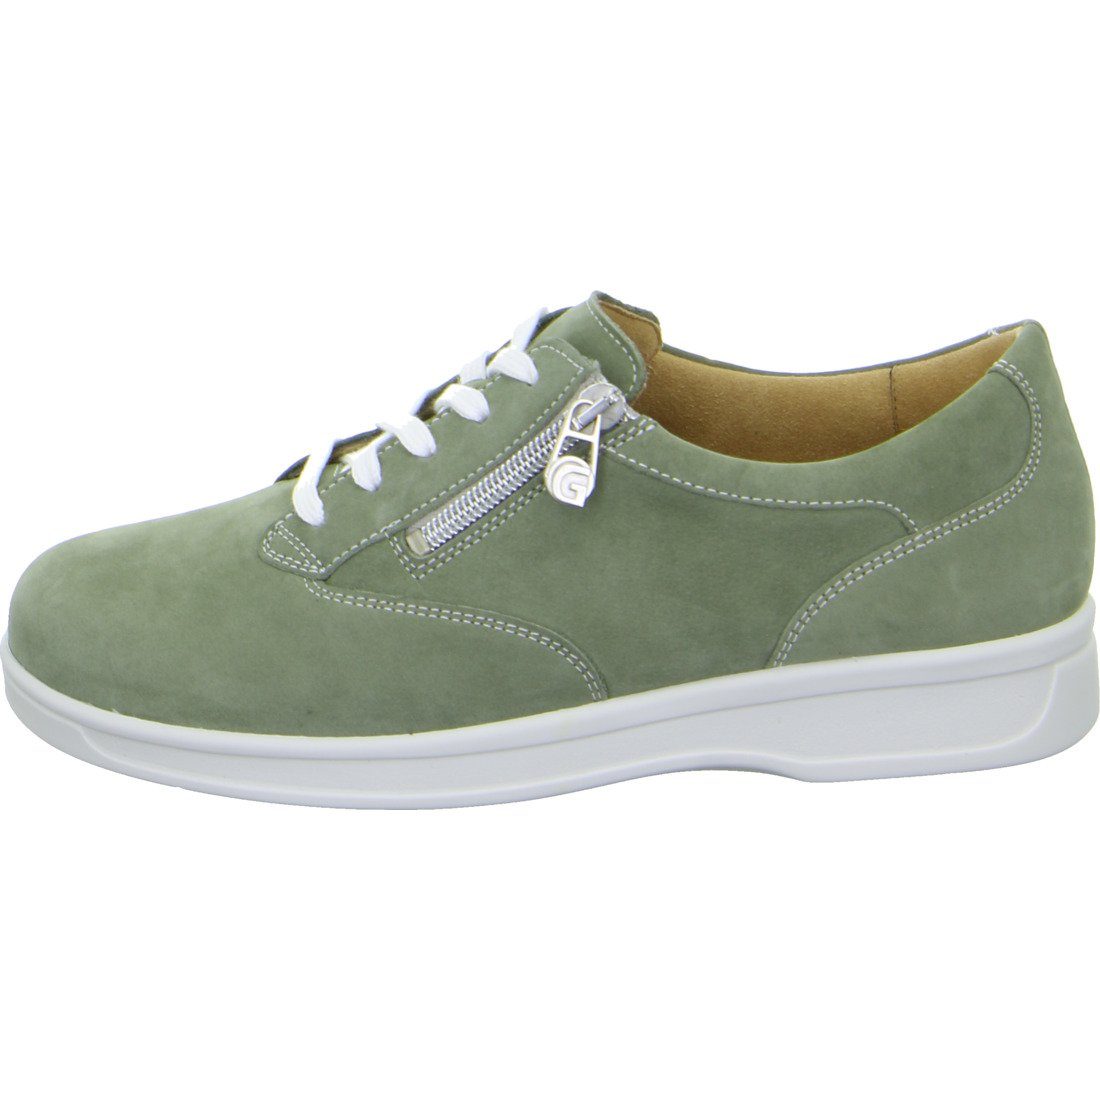 Ganter Ganter Schuhe, Schnürschuh Karin - 048878 Schnürschuh Nubuk Damen grün